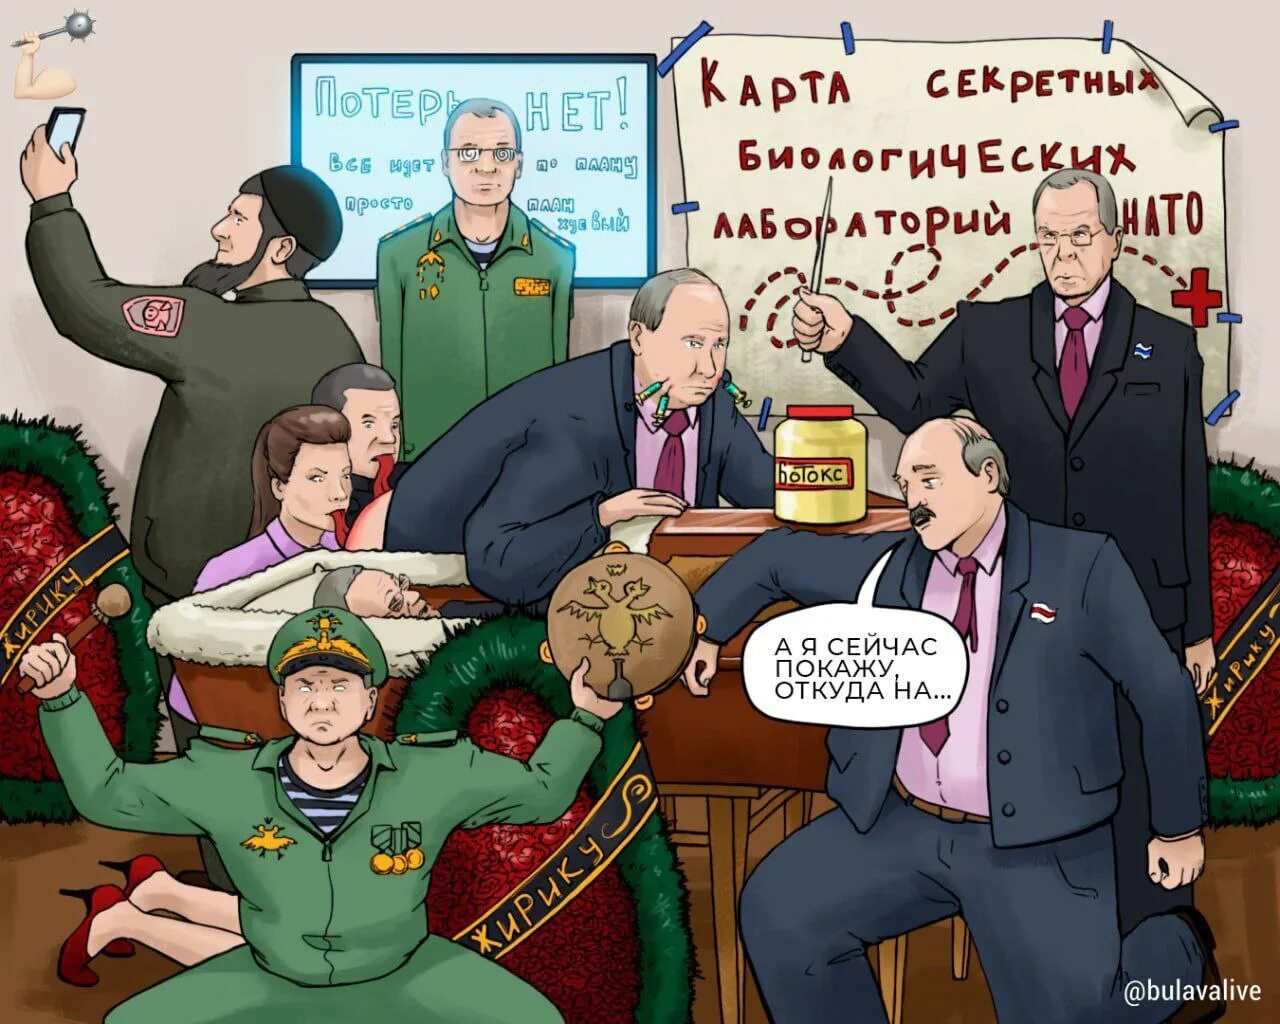 Мем нападение. Лукашенко карикатура. Политические карикатуры. Политические карикатуры на Путина. Карикатуры про политику.